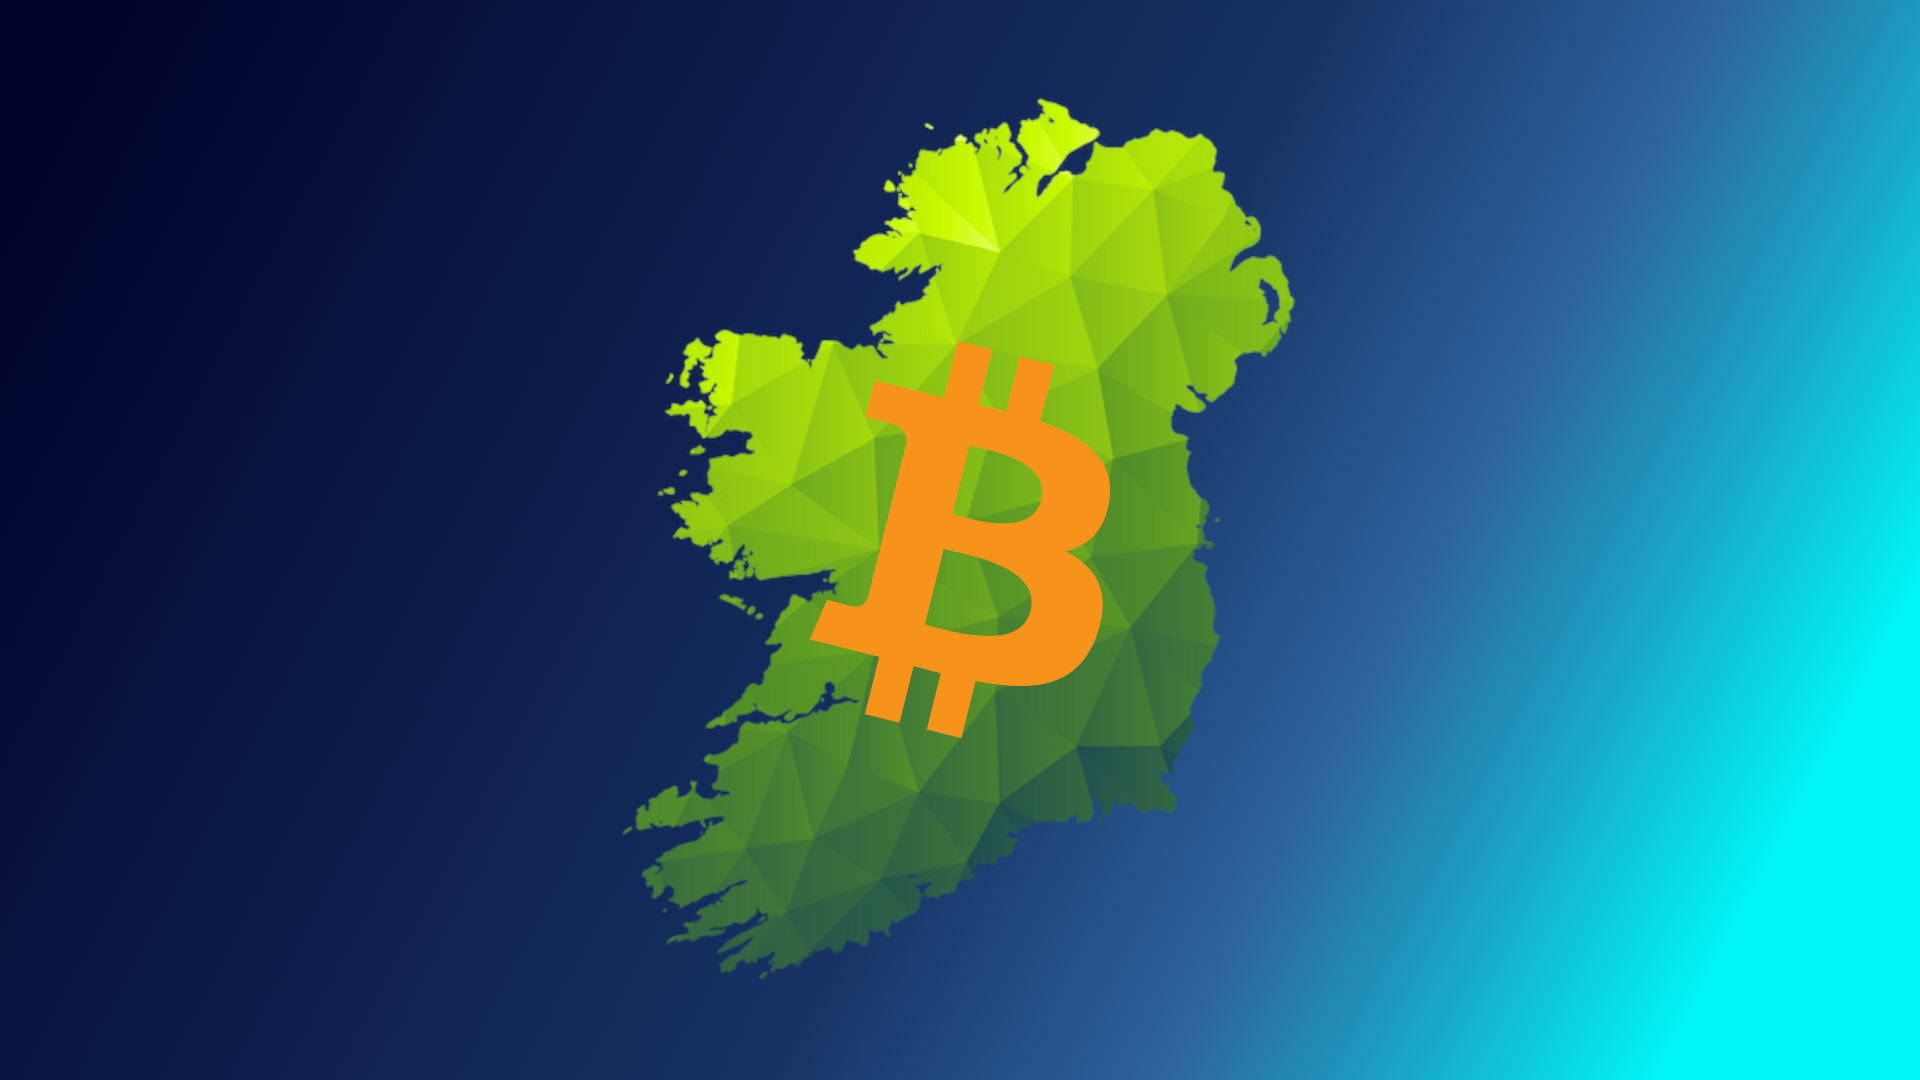 Dublin Bitcoiners